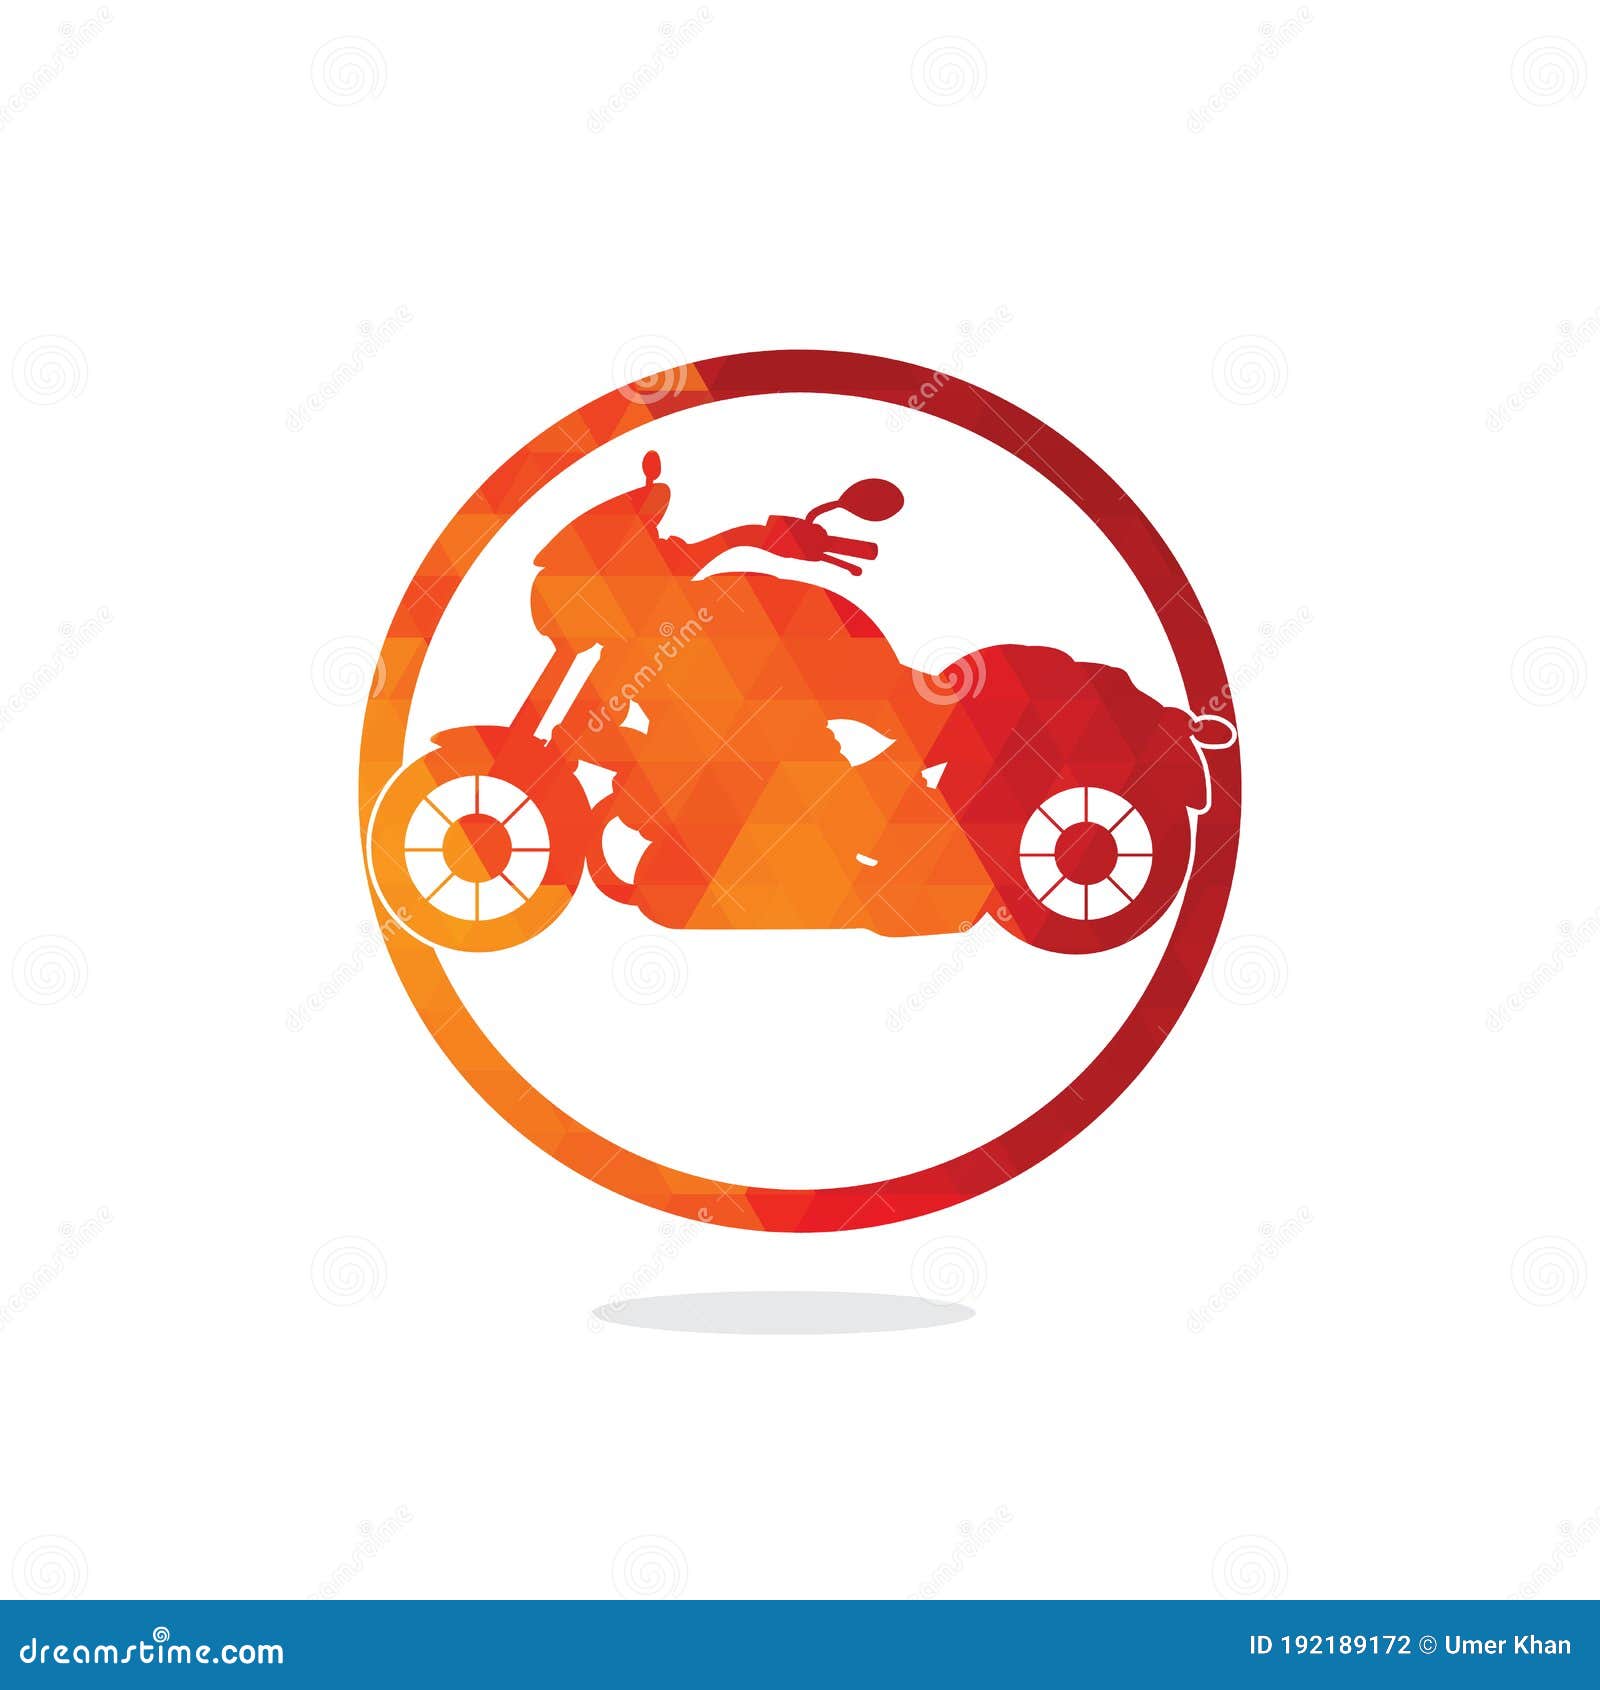 corrida de moto com design de logotipo de velocidade 11162445 Vetor no  Vecteezy